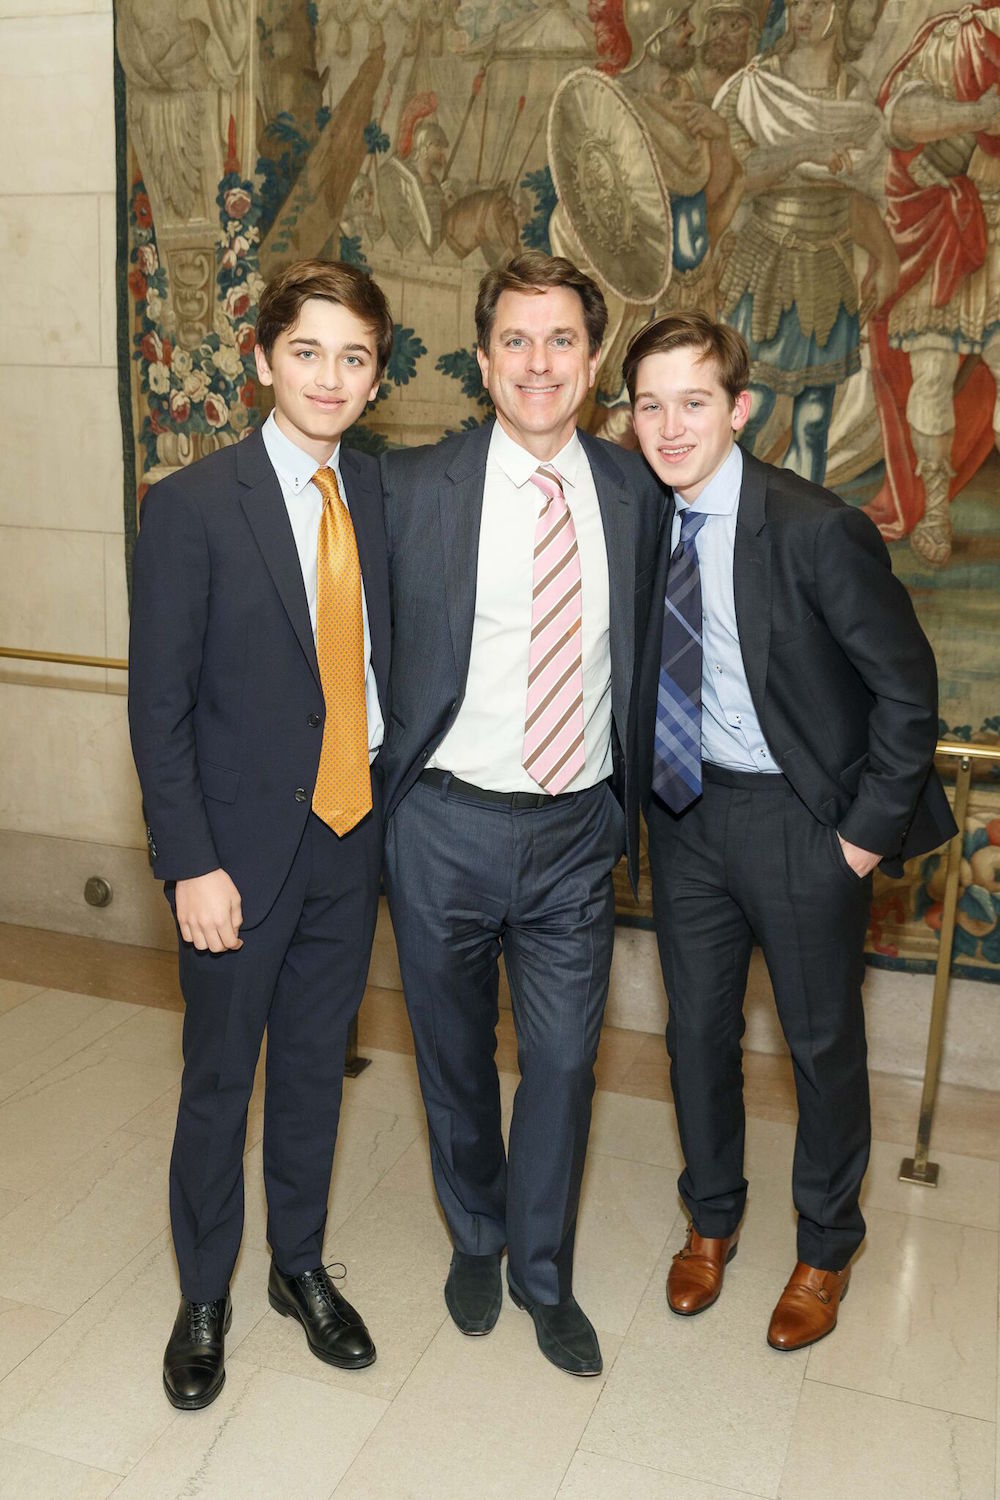 Greg with his sons Benjamin and Sebastian